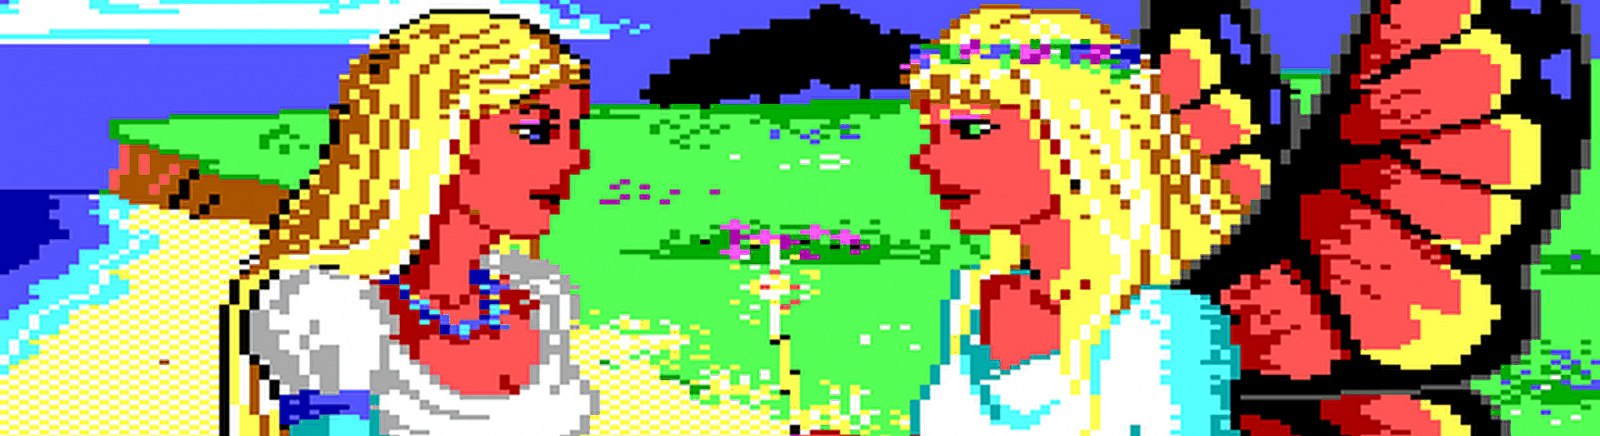 Дата выхода King's Quest 4: The Perils of Rosella (KQ4)  на Amiga, Atari ST и Apple IIgs в России и во всем мире